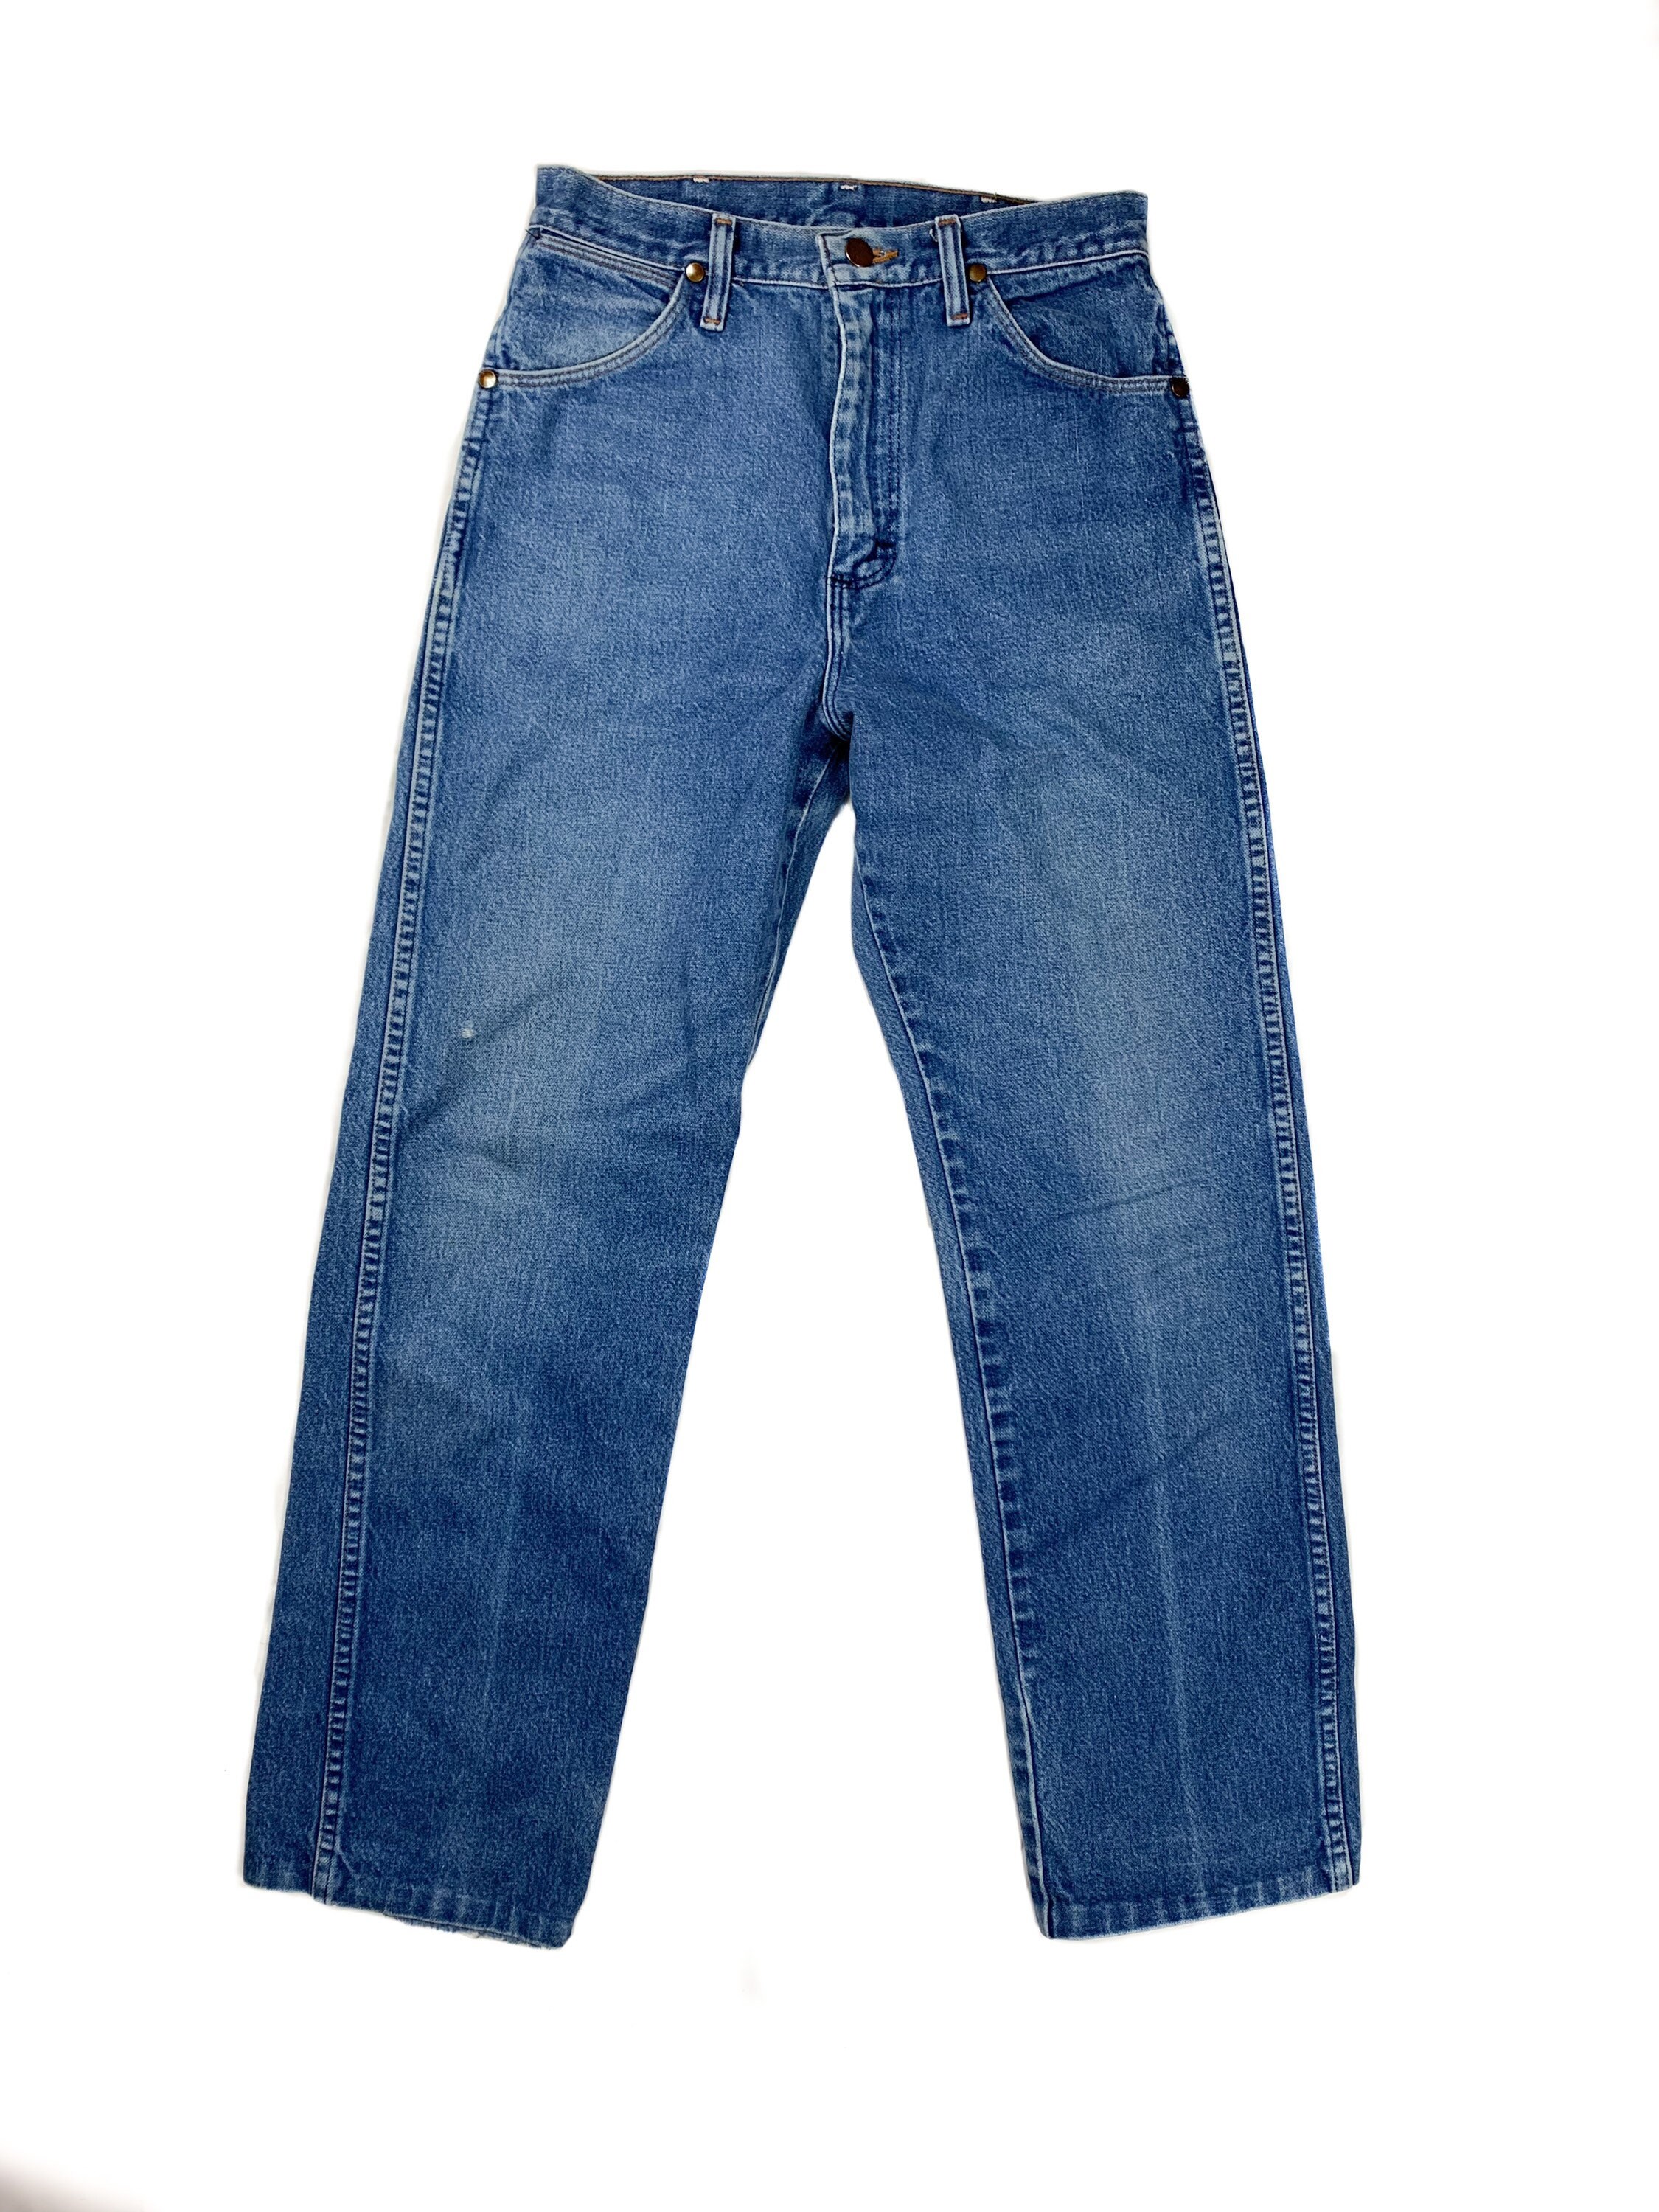 Vintage 1980’s Wrangler Denim Jeans Size Small